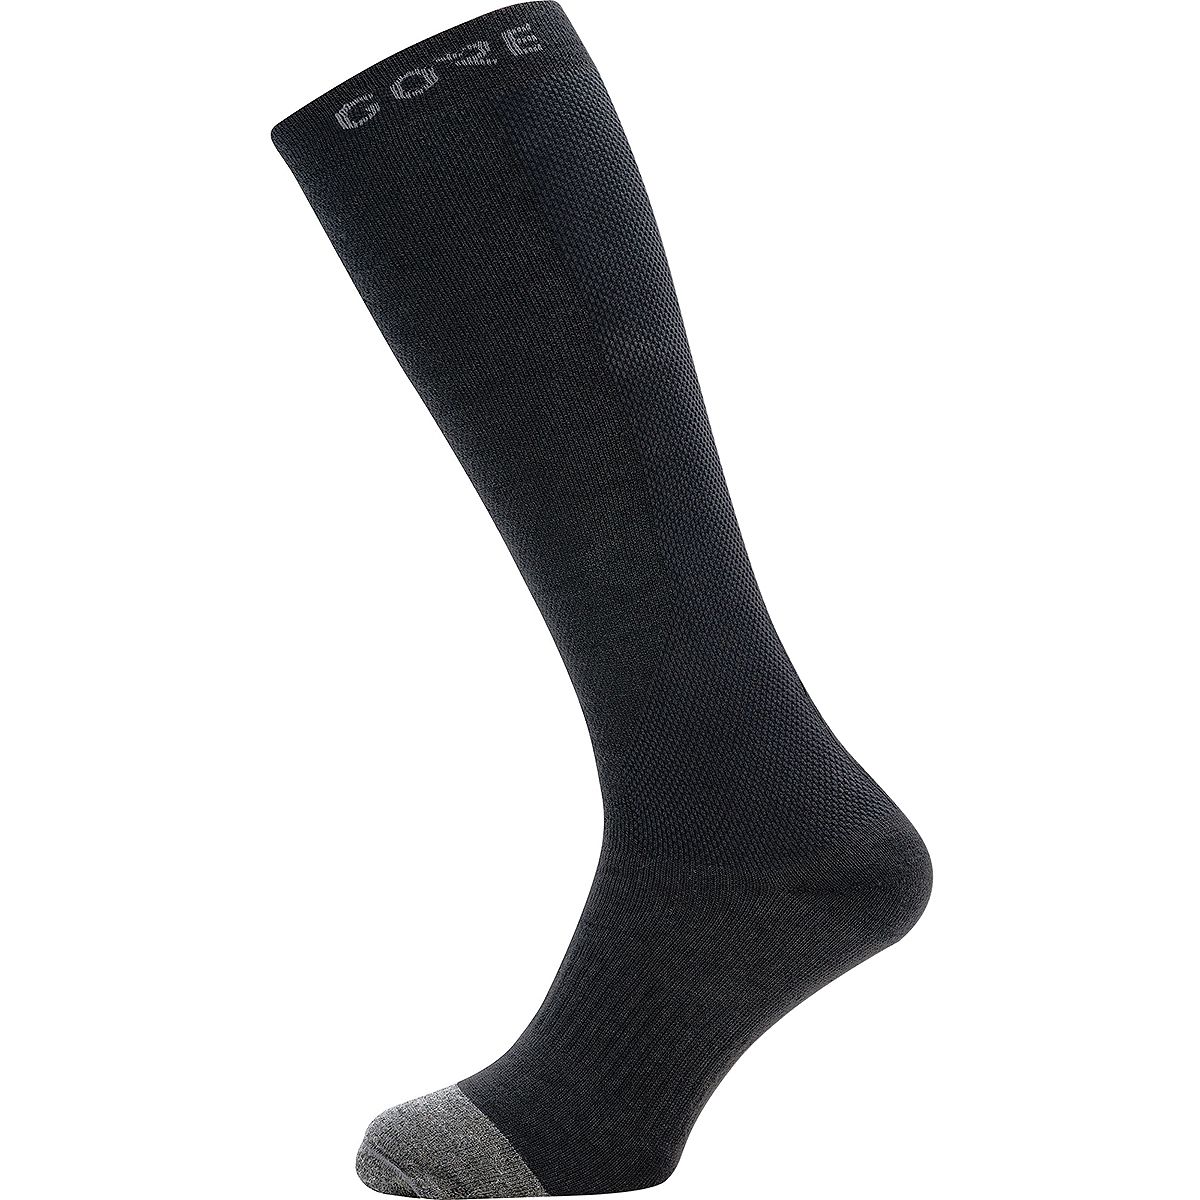 GOREWEAR Thermo Long Sock Black/Graphite Grey, 8.0-9.5 - Men's